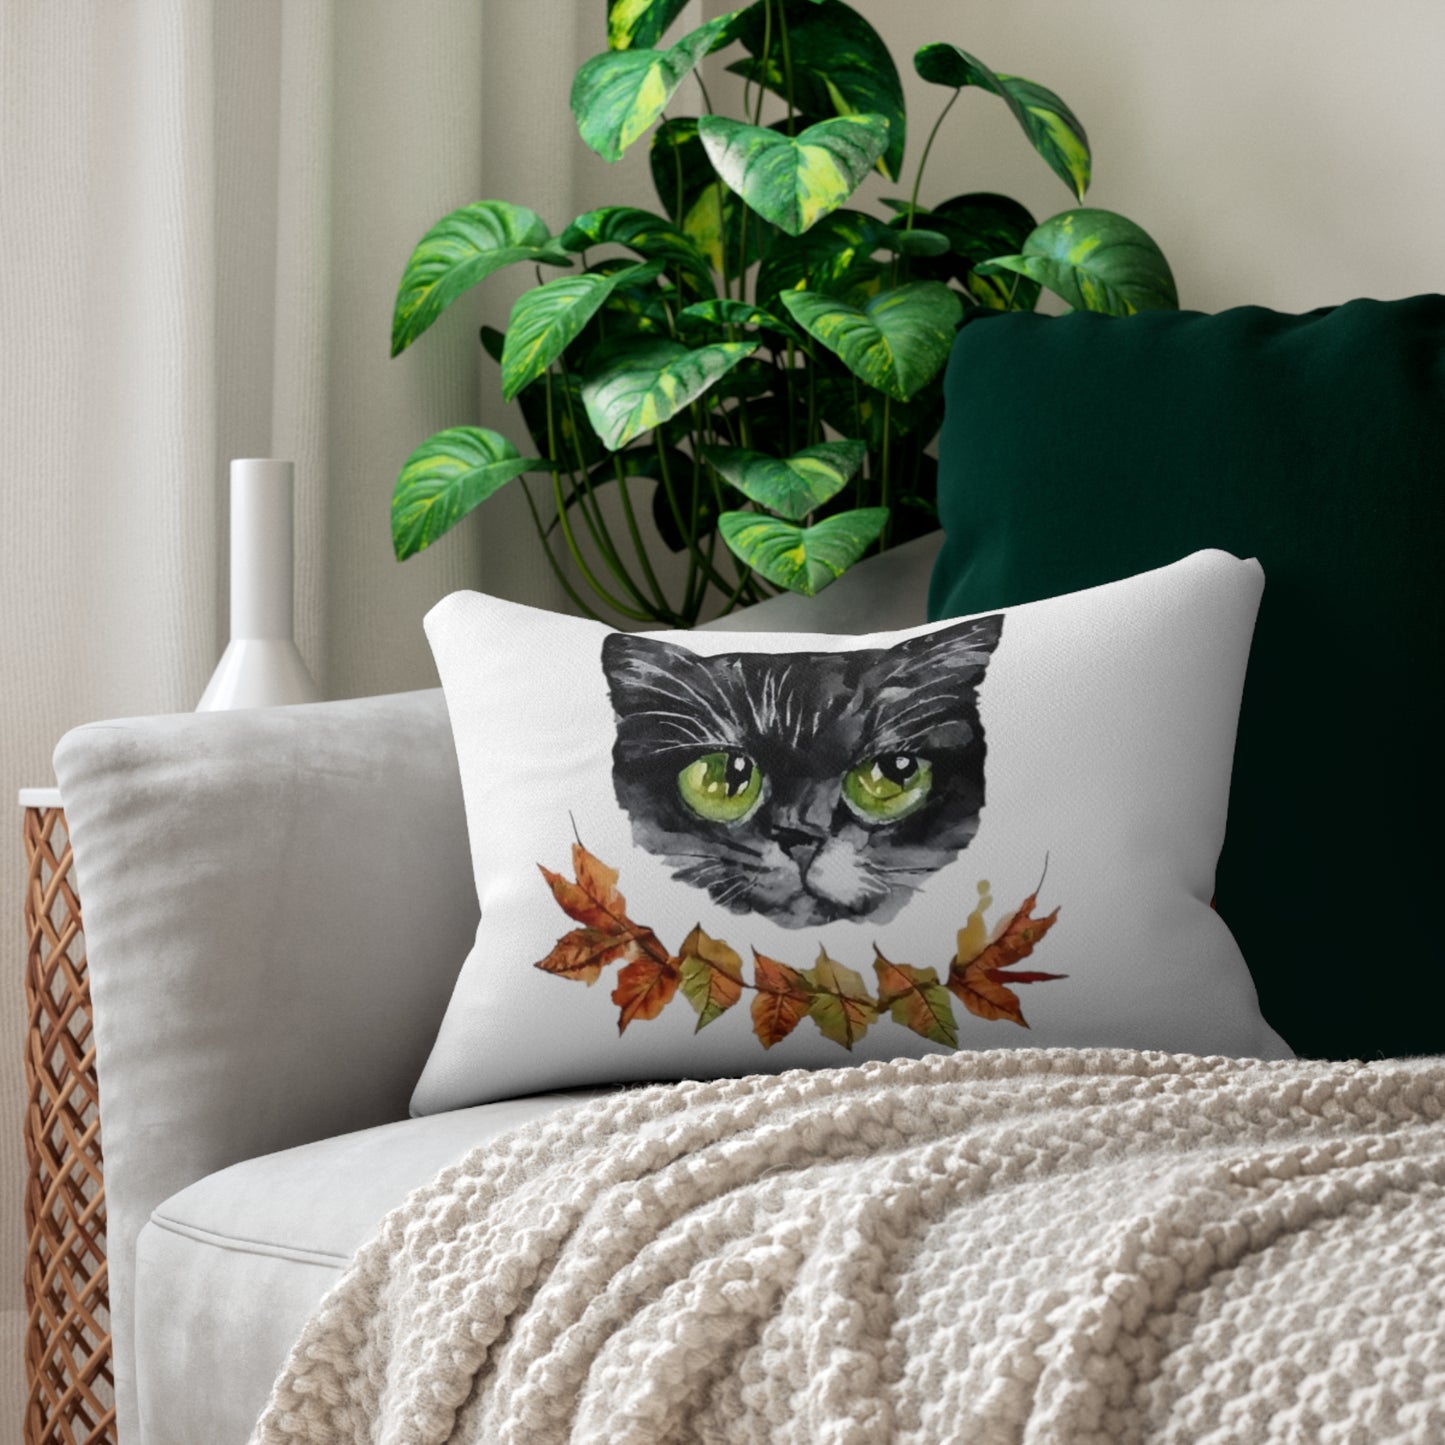 Cat and Leaves  Spun Polyester Lumbar Pillow perfect for Fall season décor